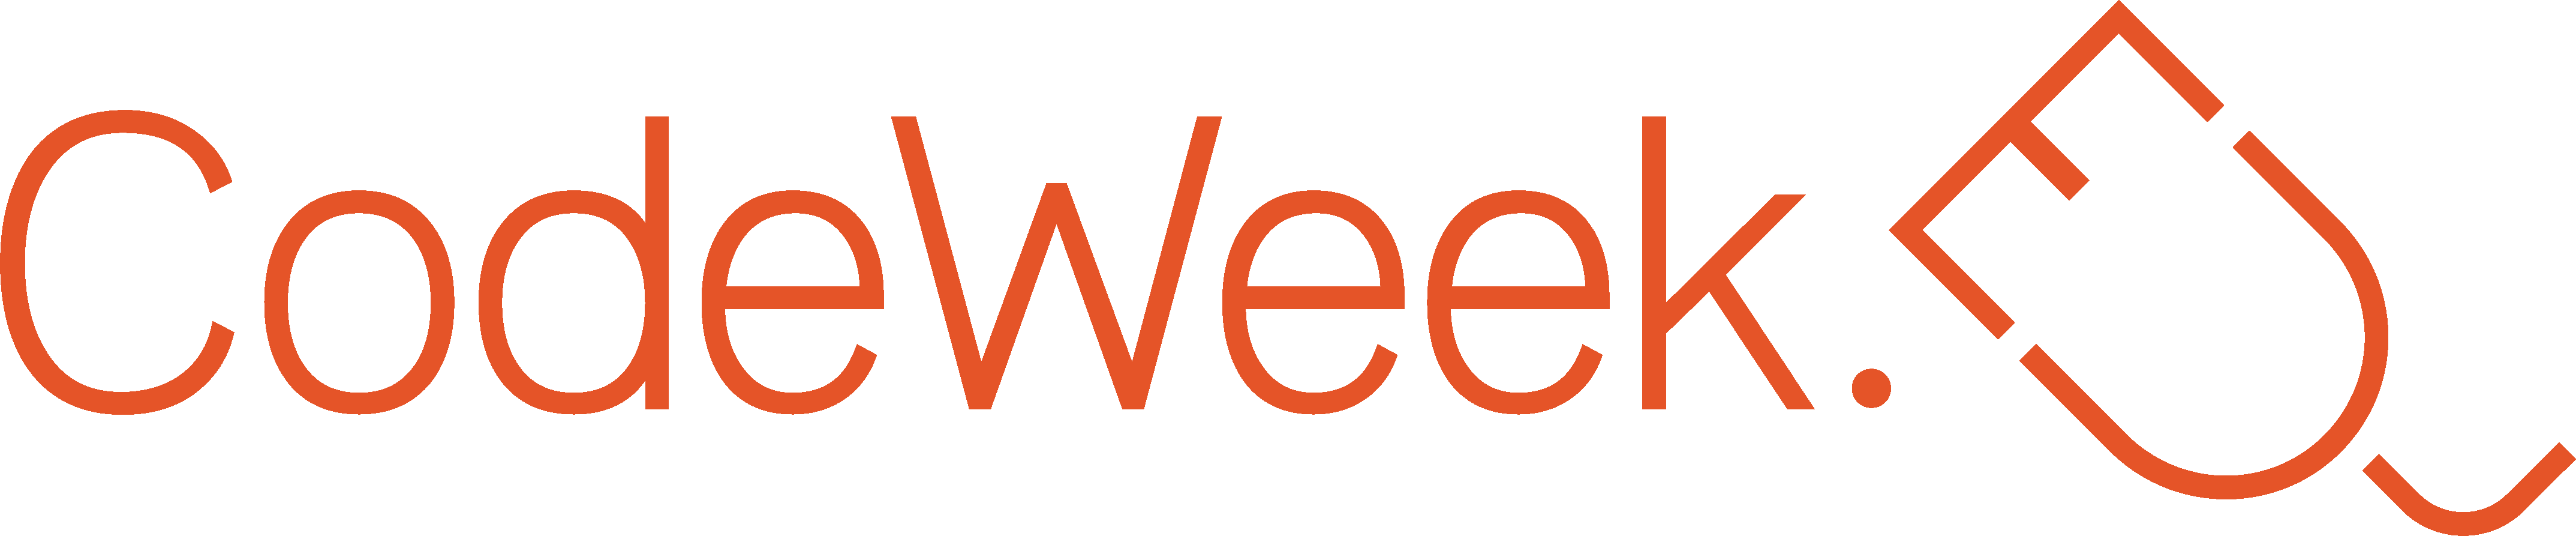 Code Week Logo